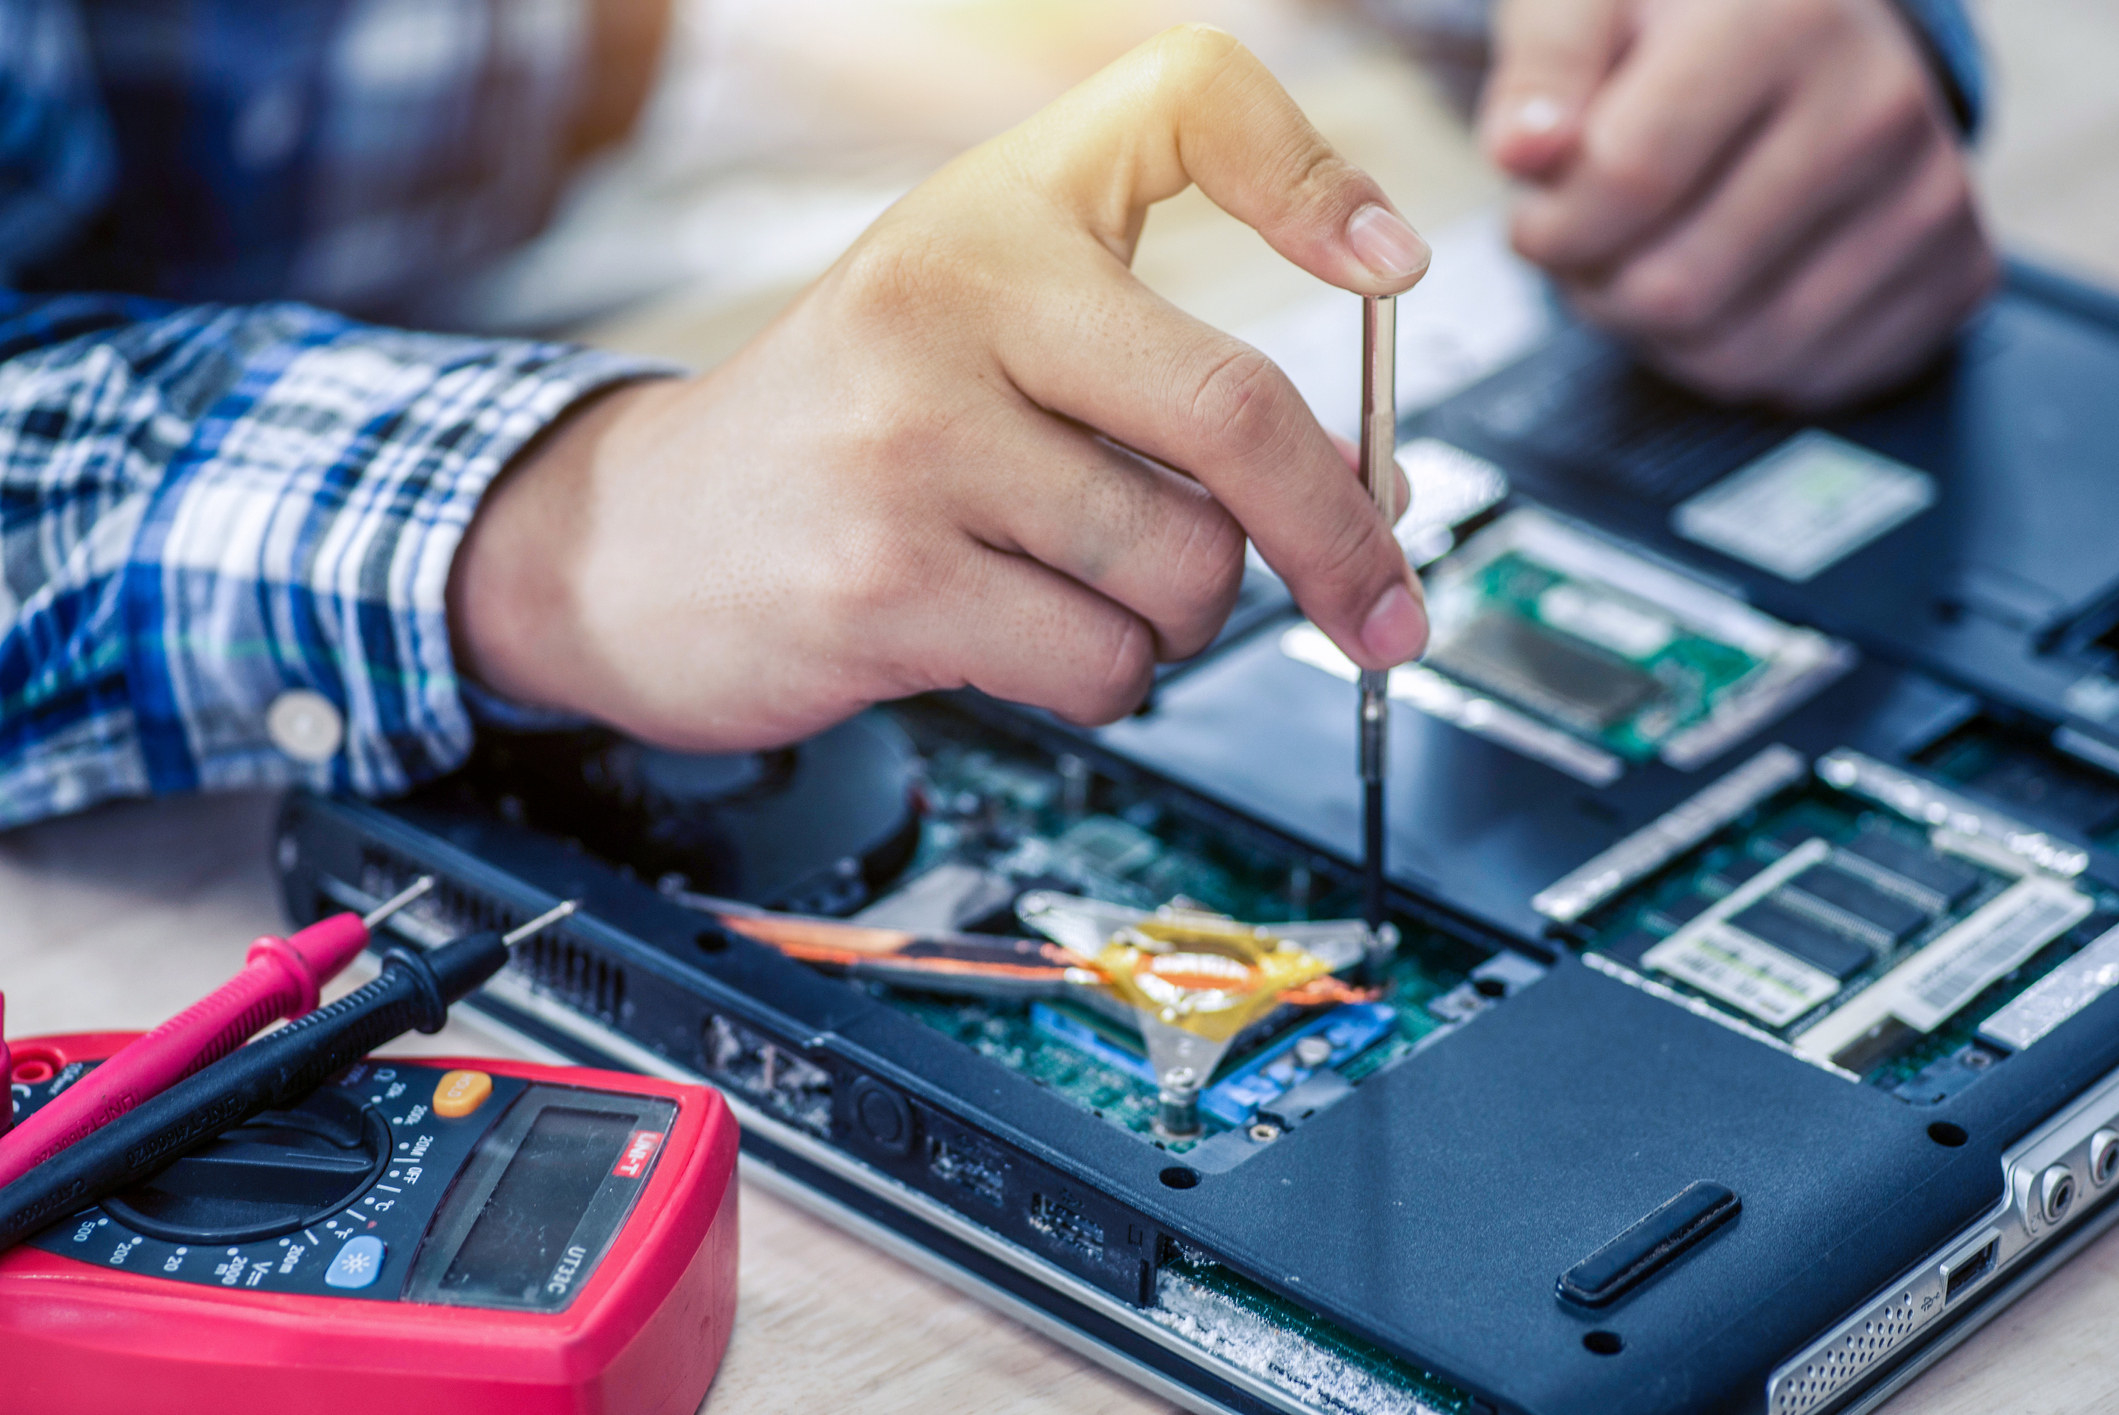 A person repairing a computer